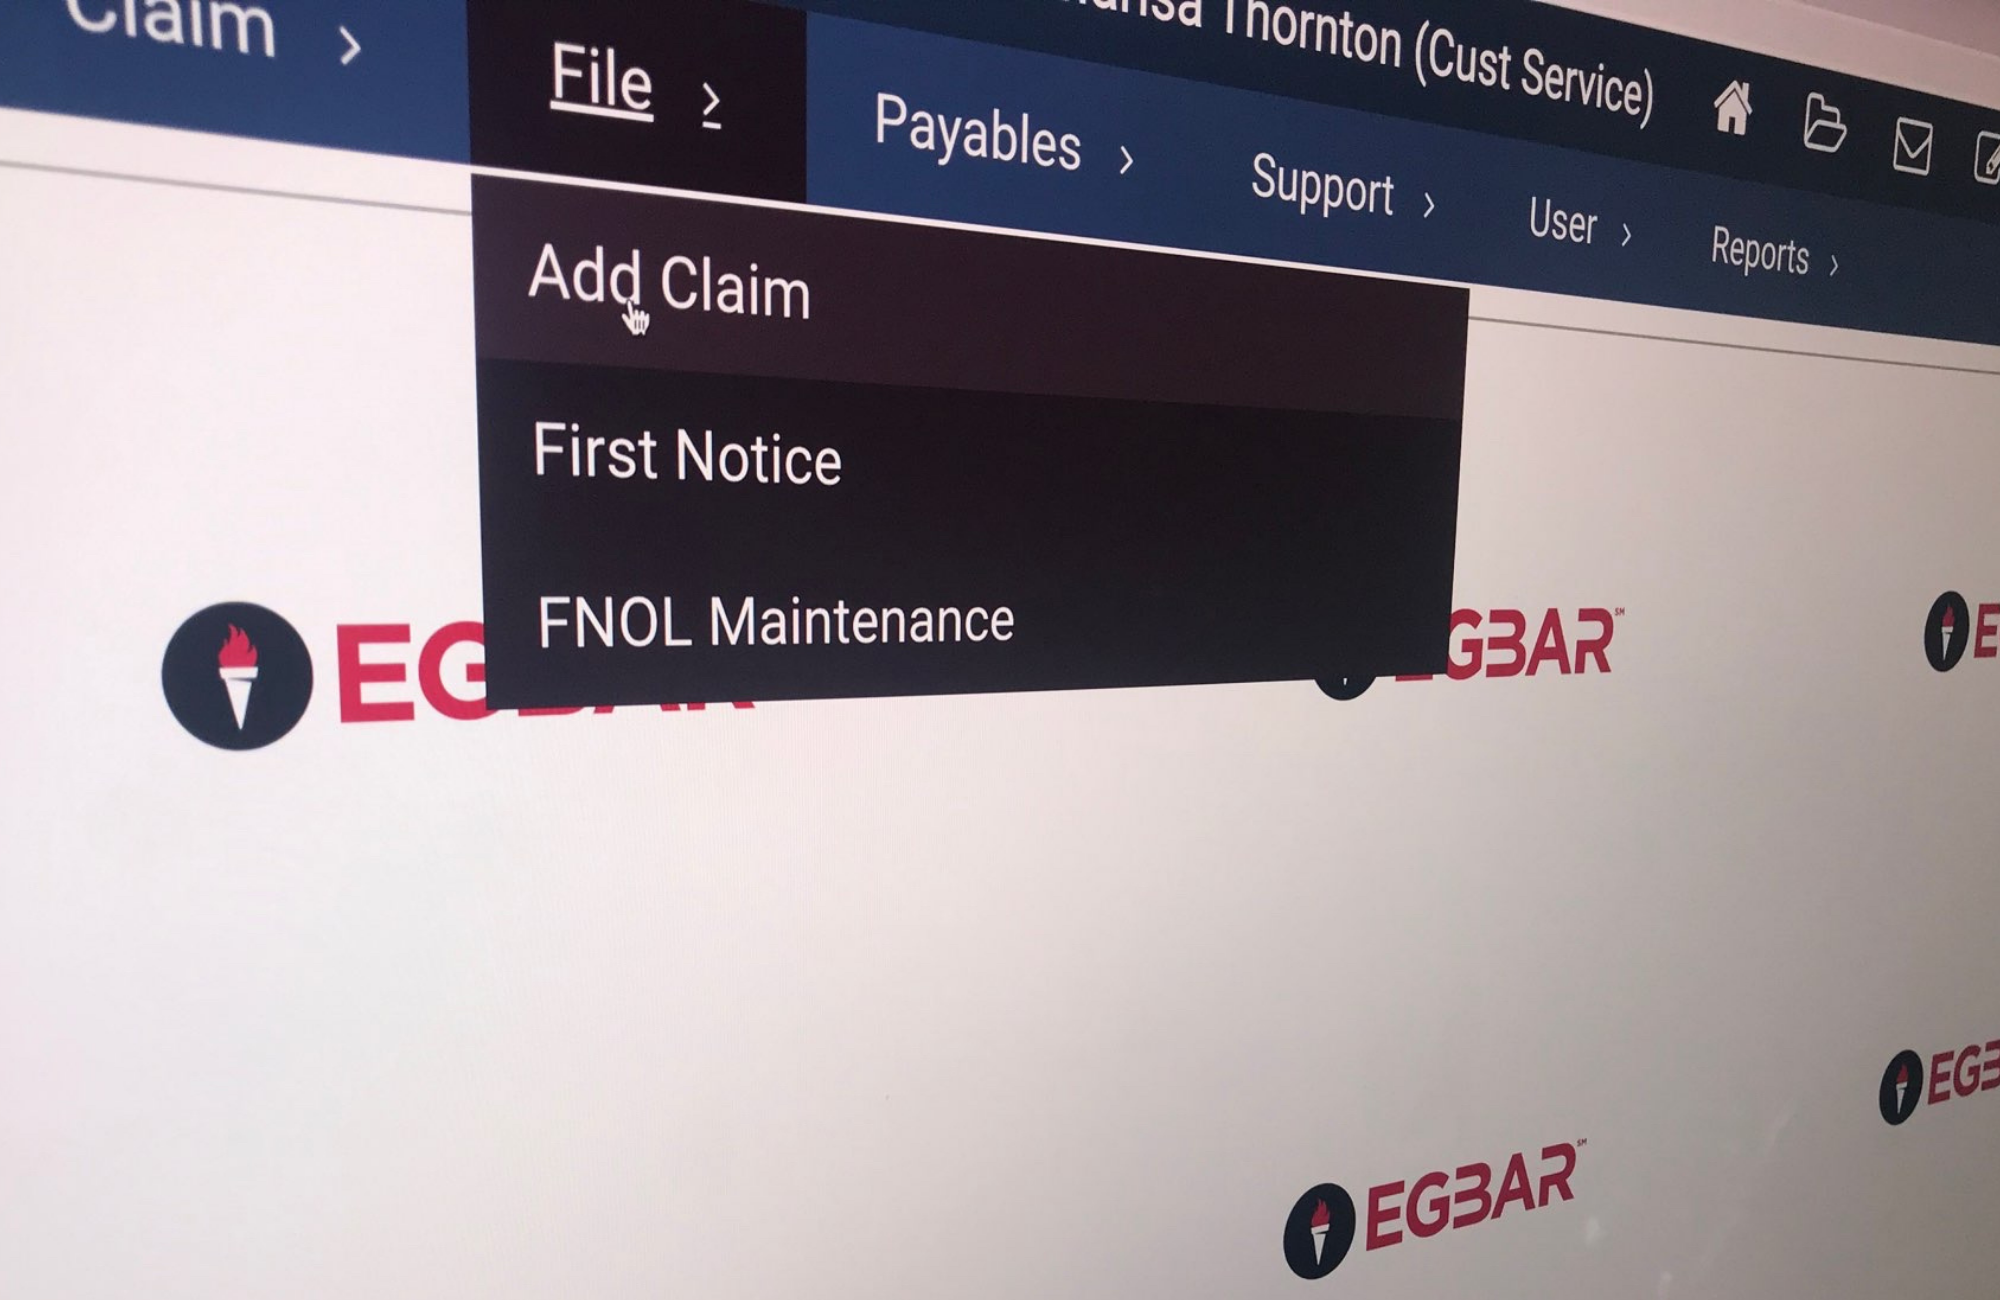 A-G Specialty Insurance EGBAR software screenshot to “Add Claim” screen.